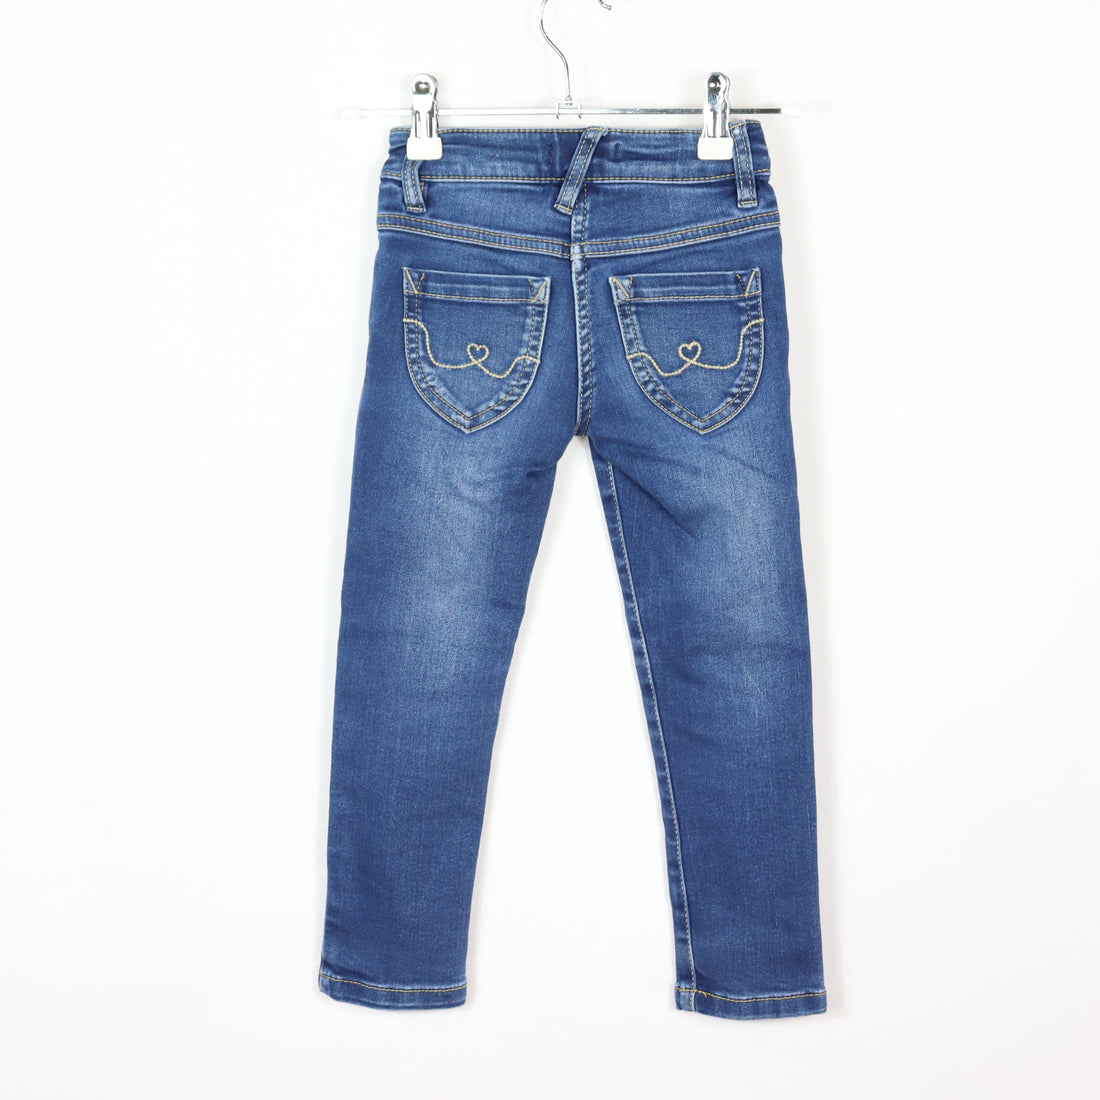 Jeans - S.Oliver - 98 - dunkelblau - Sehr guter Zustand